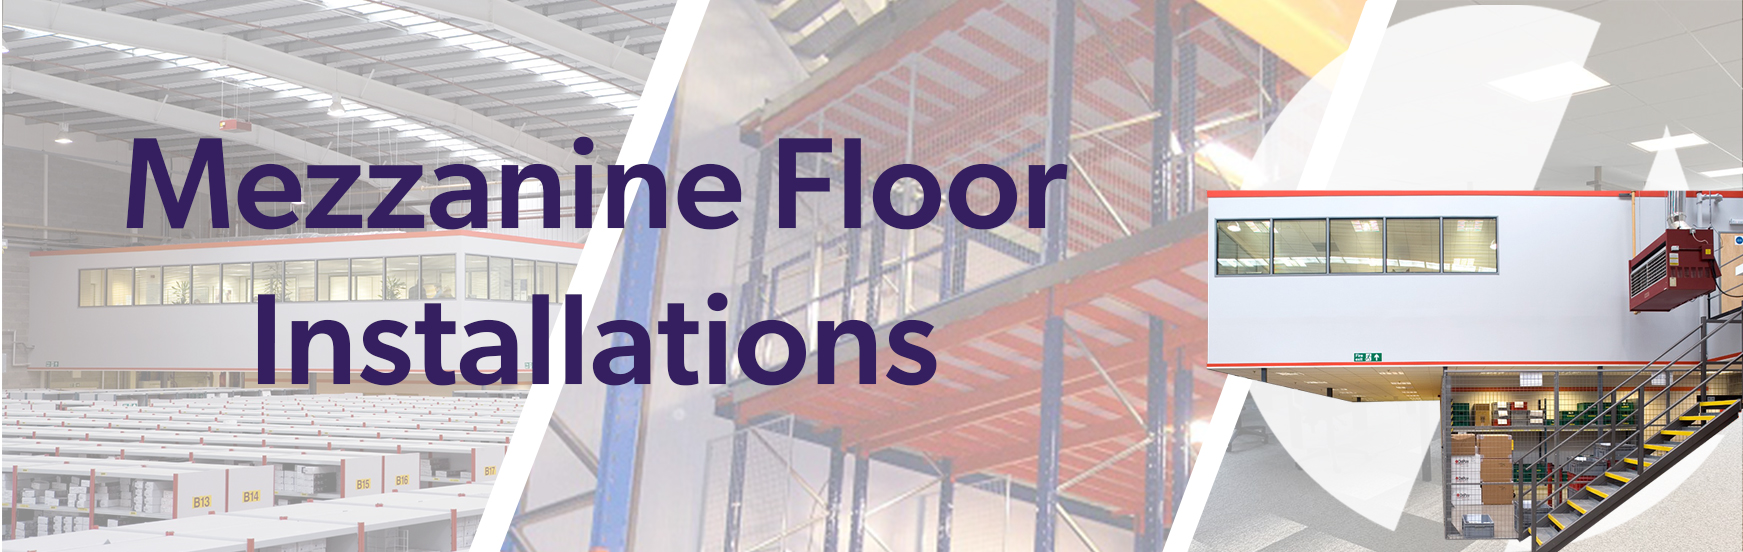 albion mezzanine floor installations